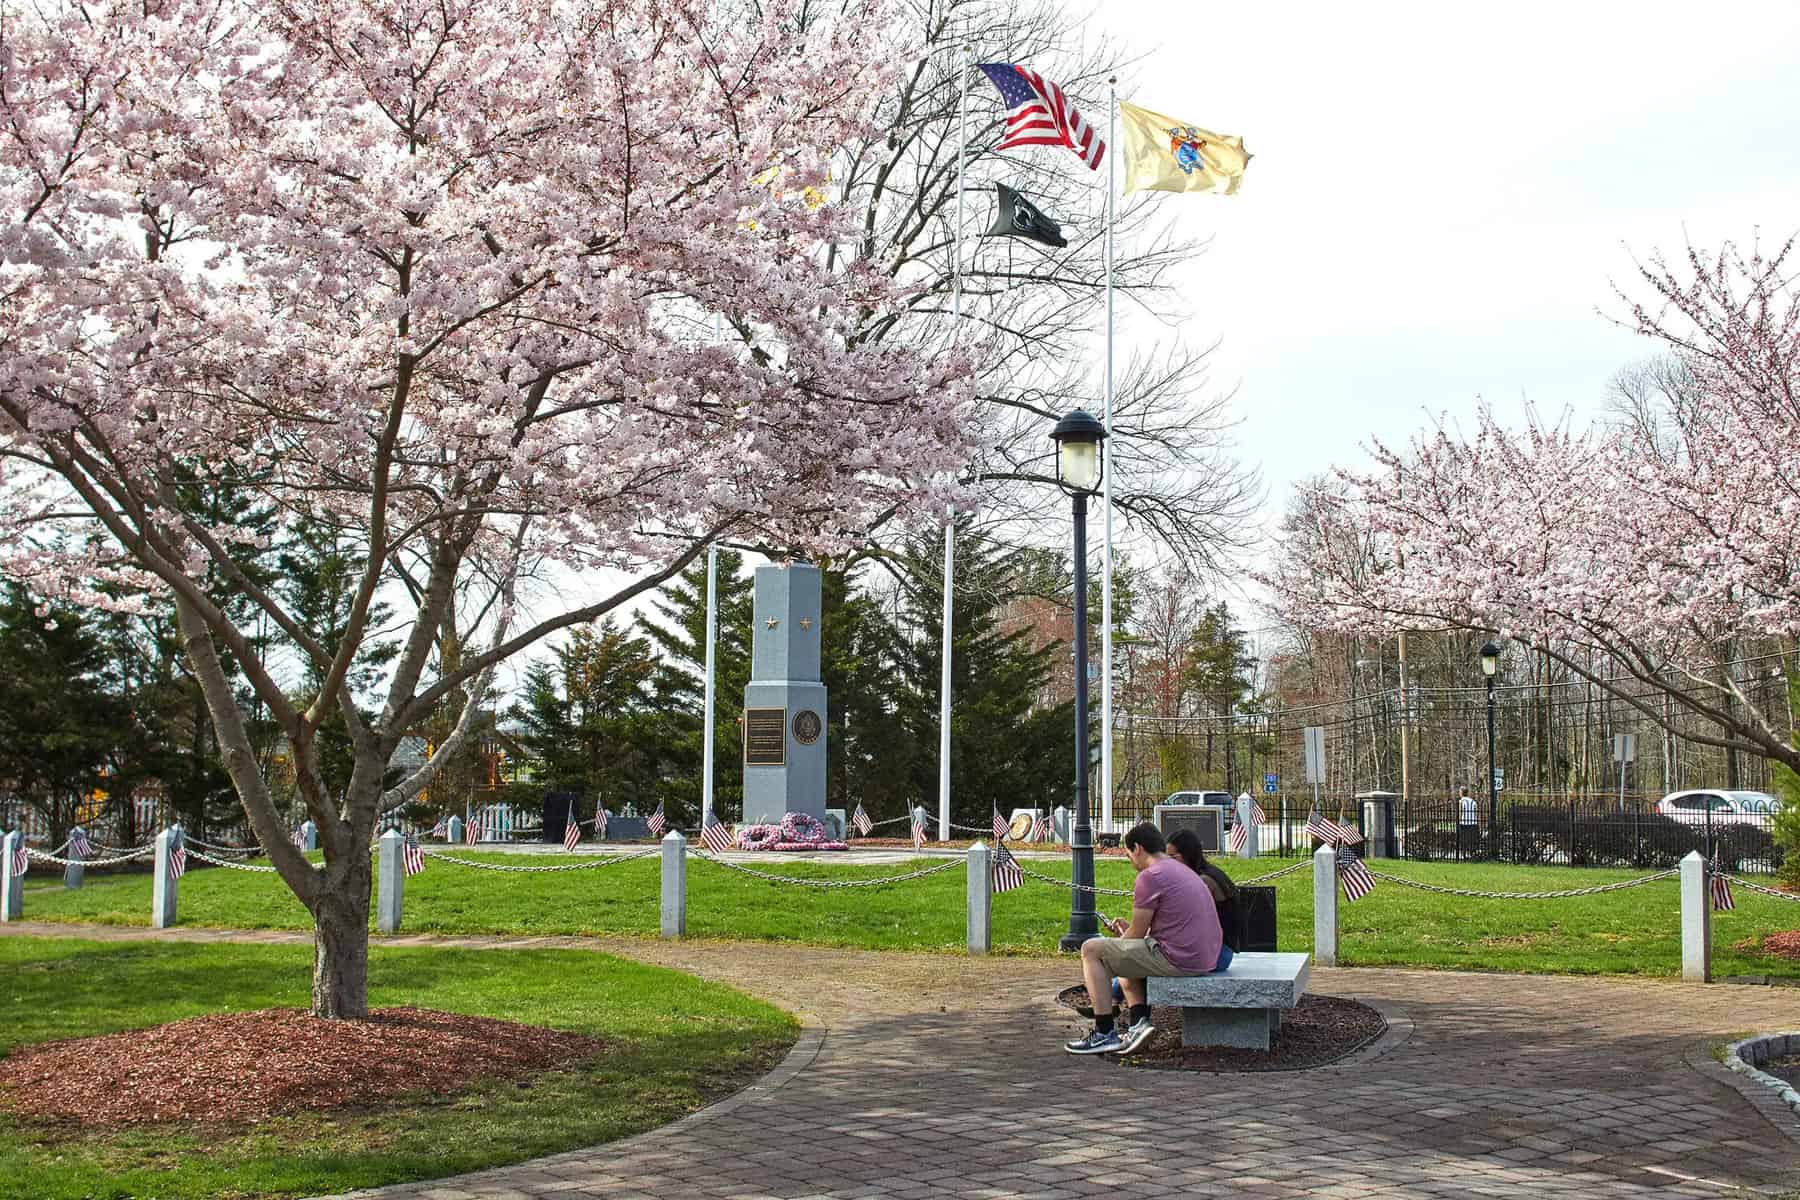 Veterans Memorial Park In Parsippany-Troy Hills NJ